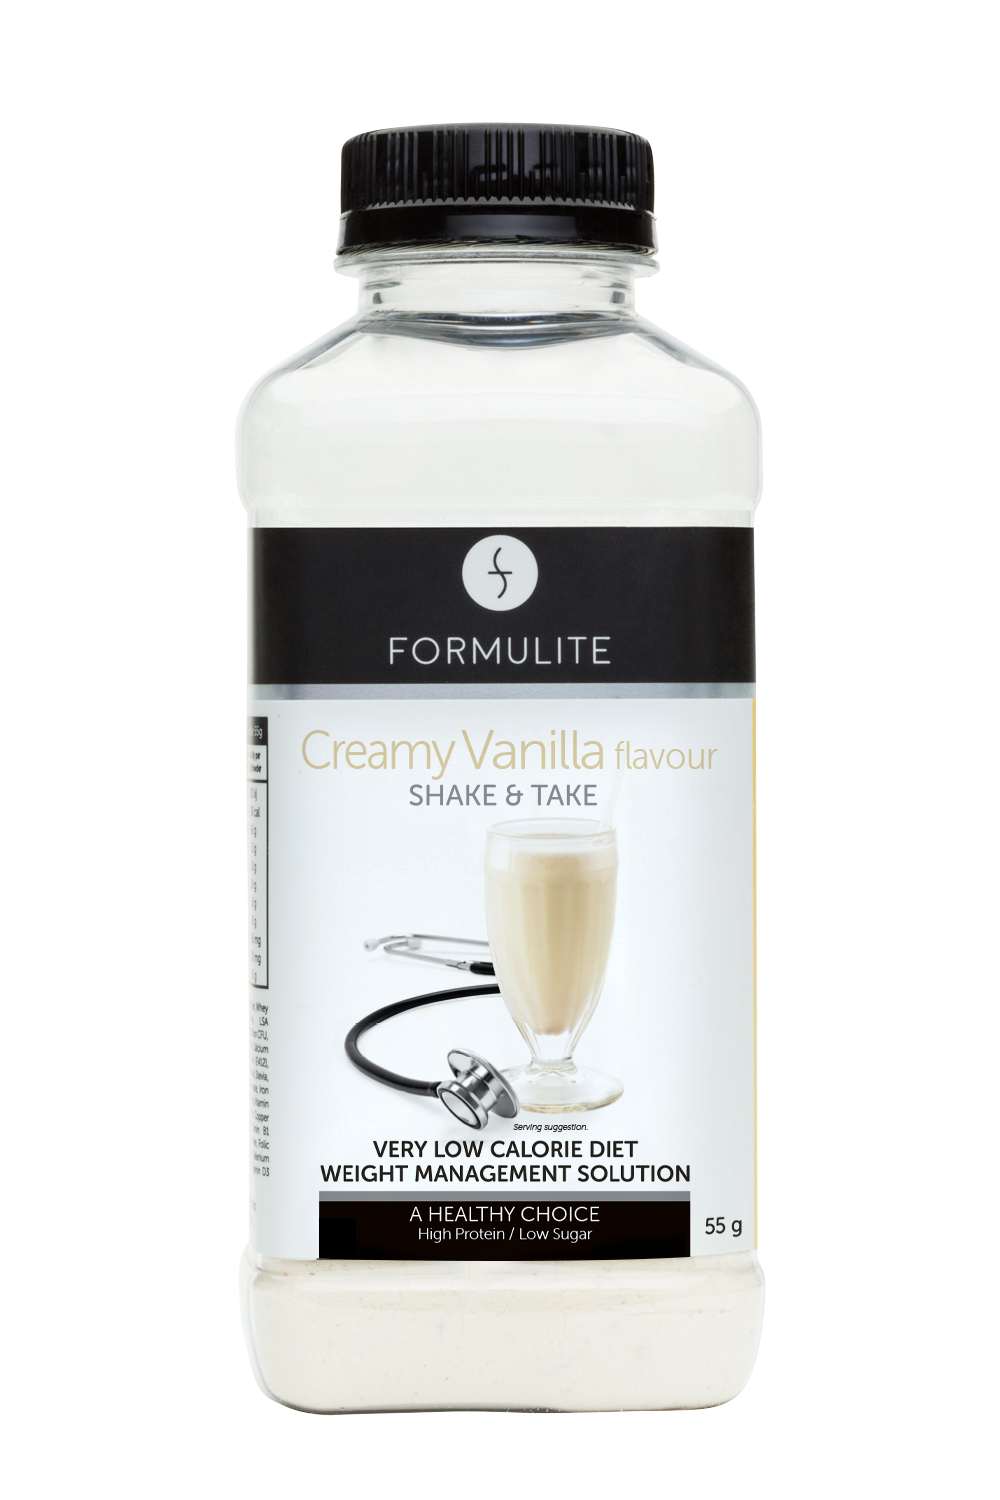 Formulite Meal Replacement Shake & Take - Creamy Vanilla Flavour 55g Single Serve